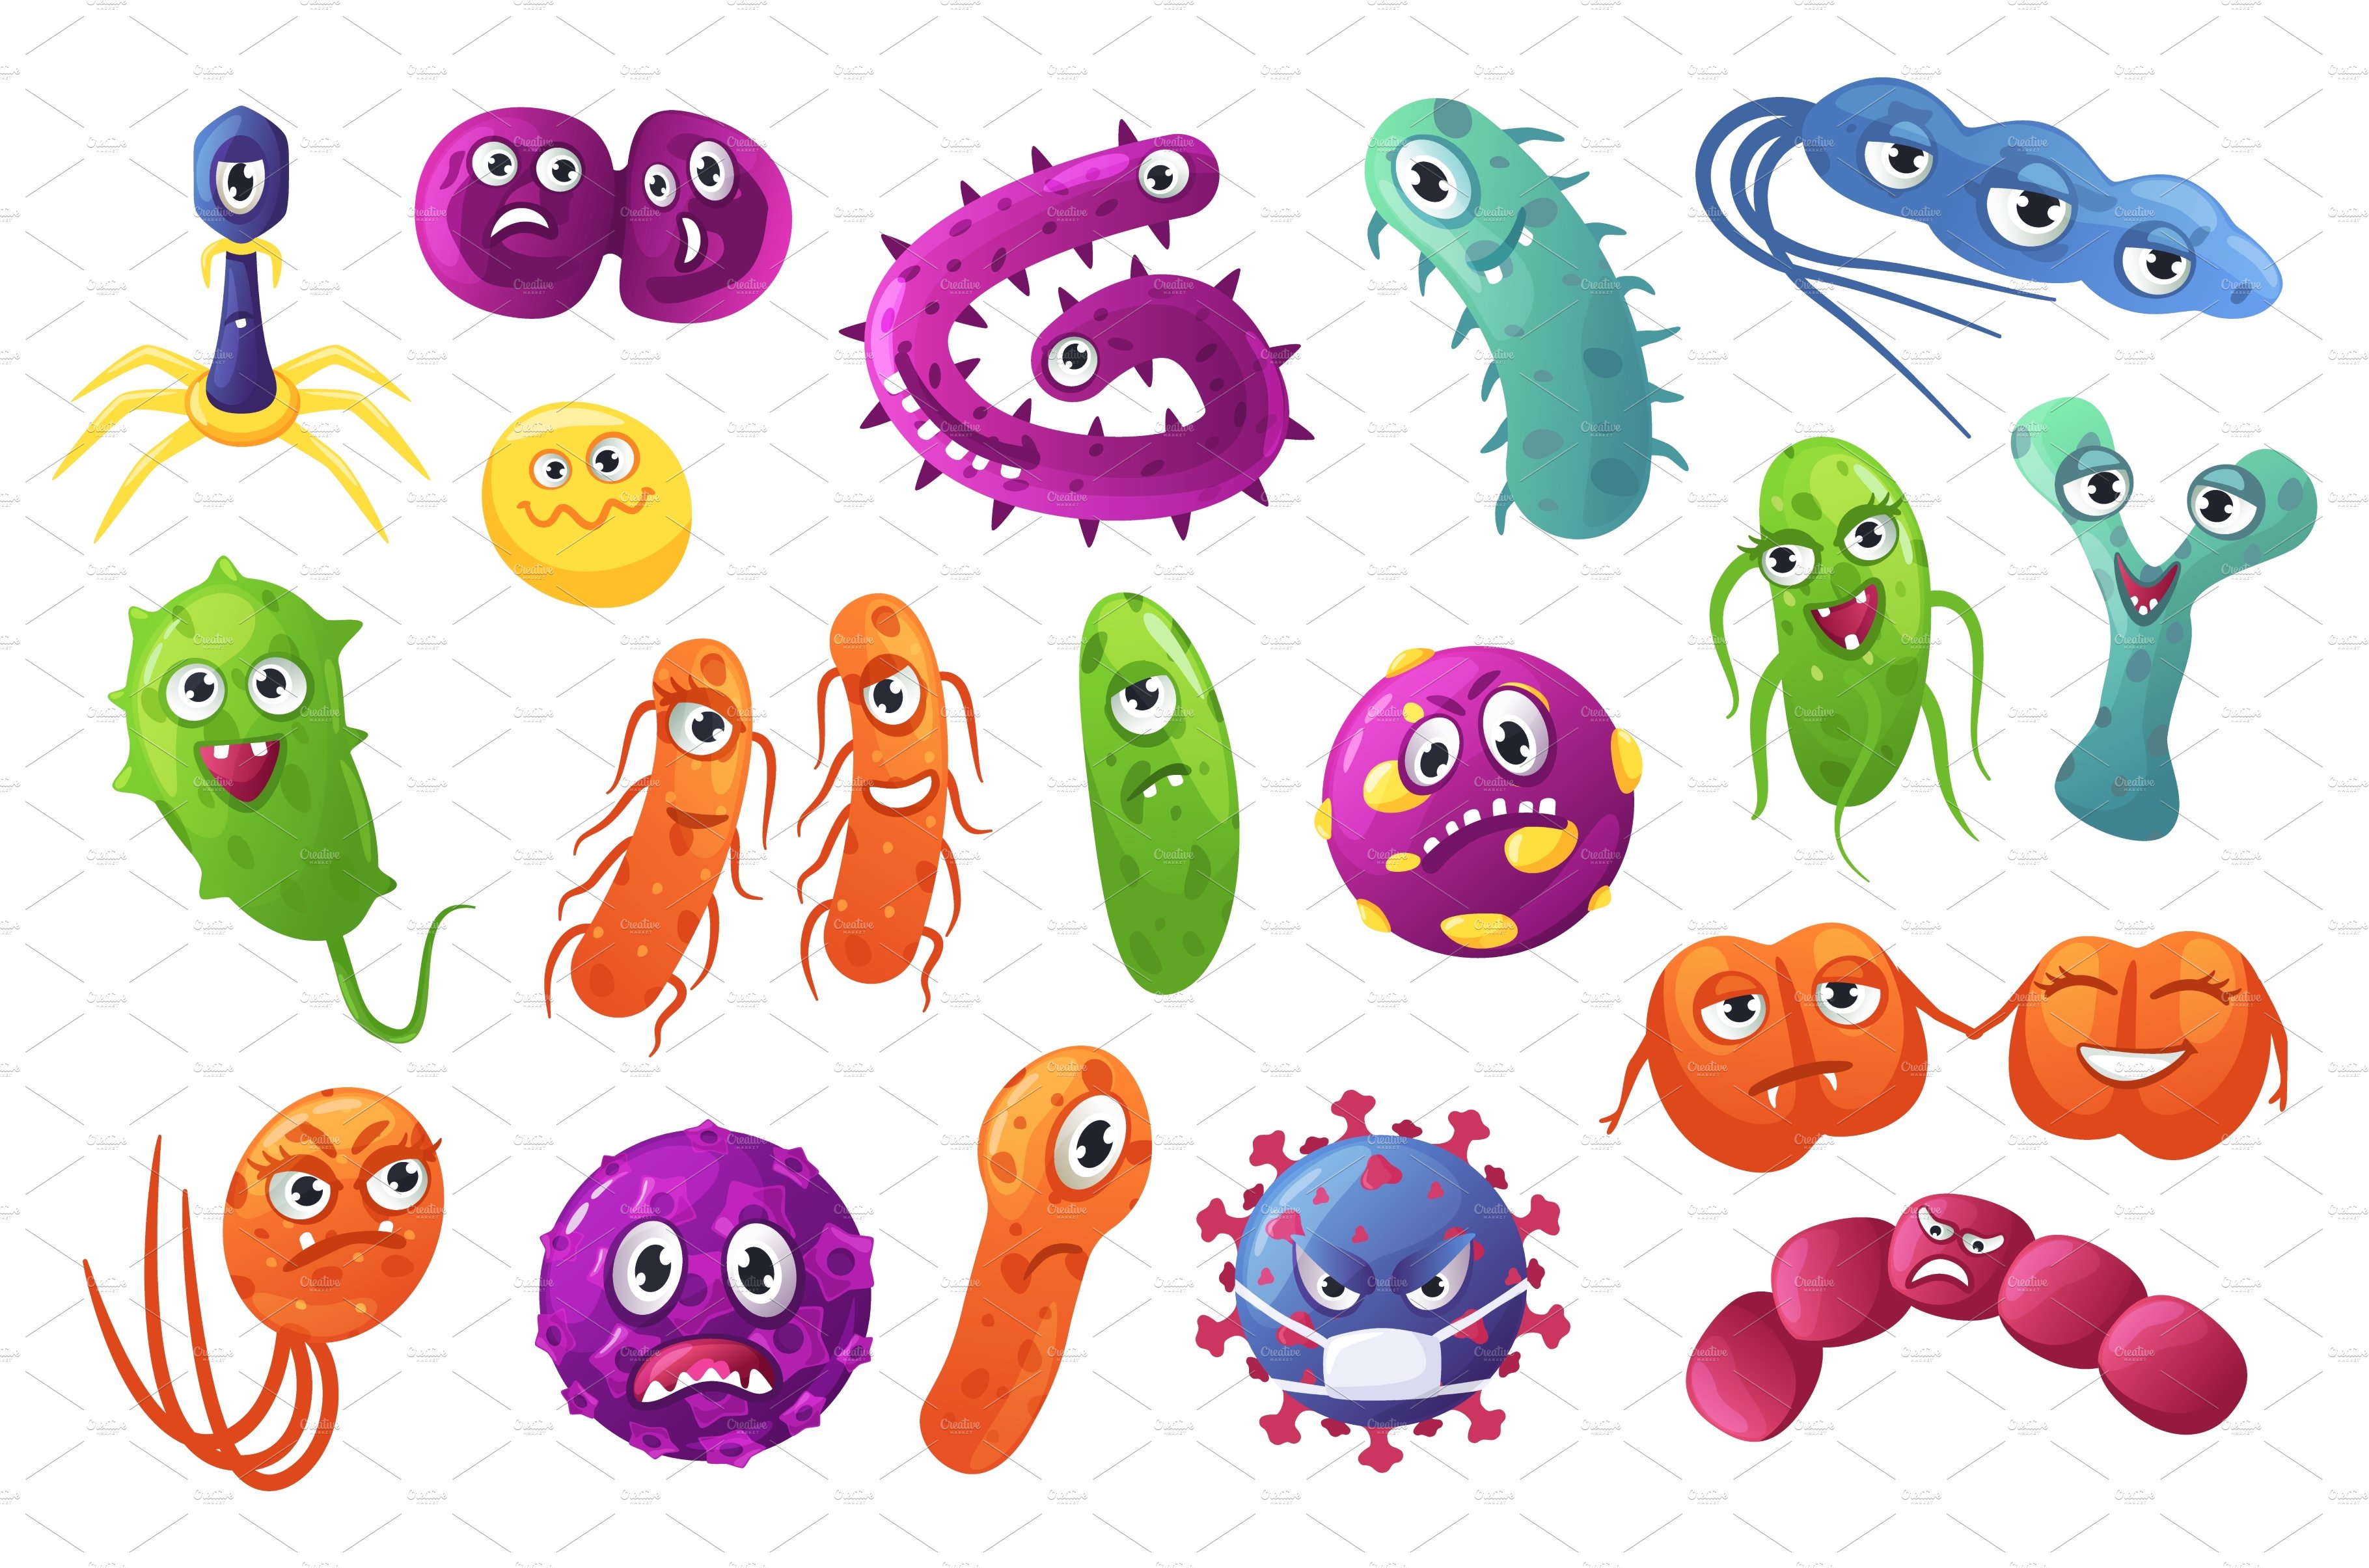 Cartoon bacteria characters. Cute cover image.